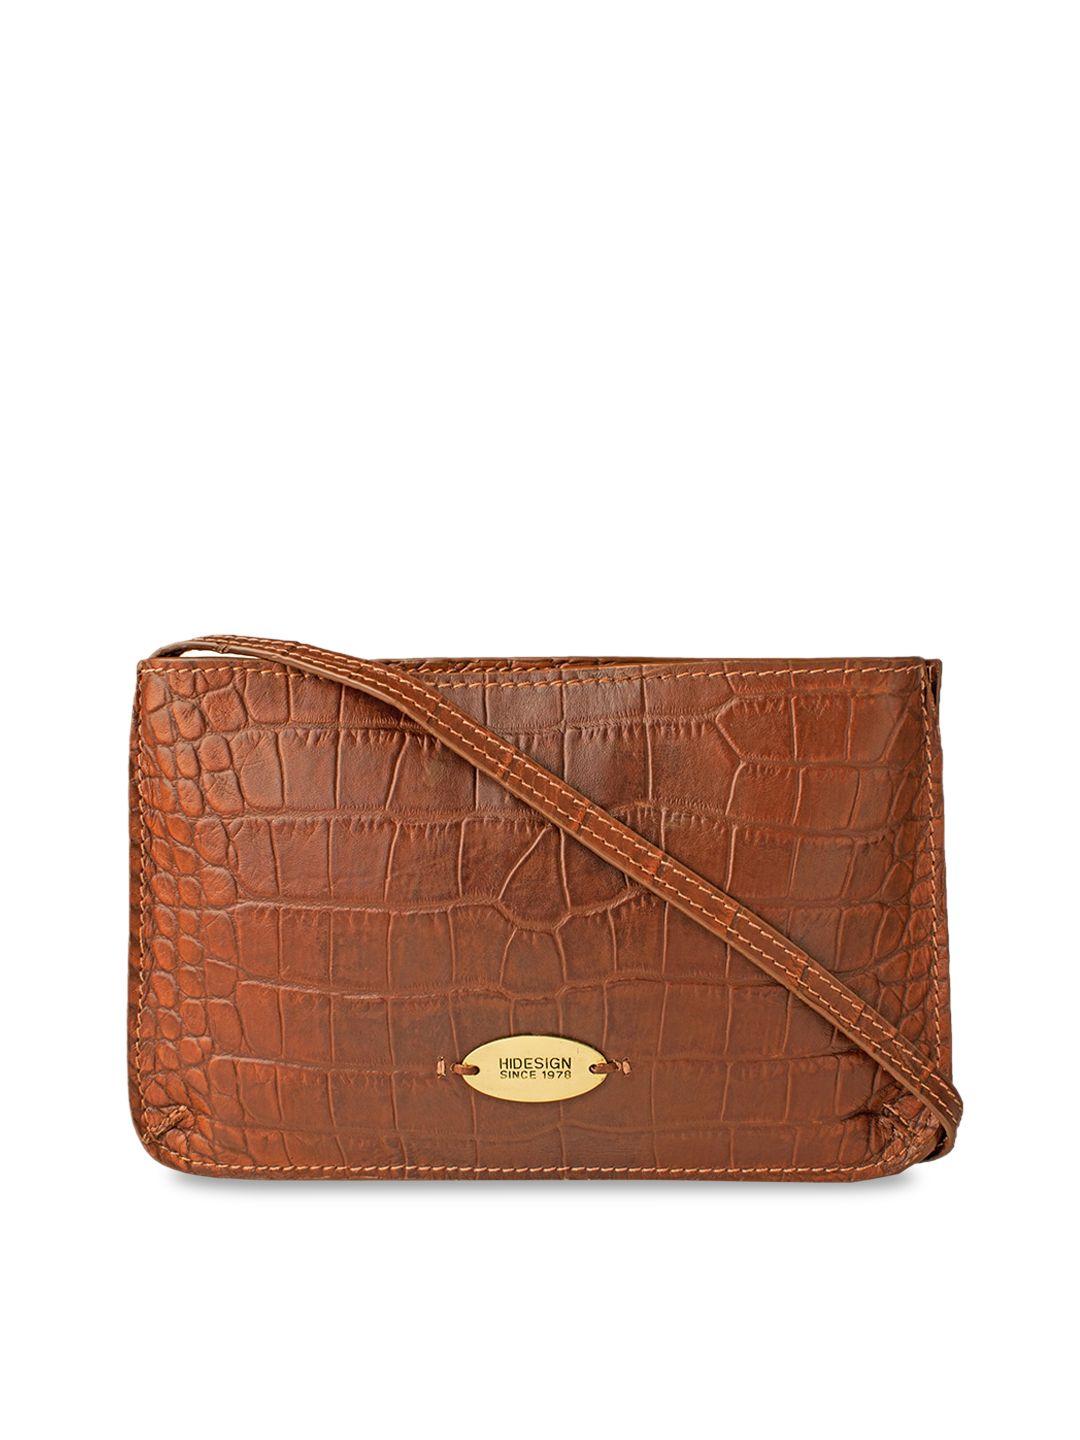 hidesign tan textured purse clutch